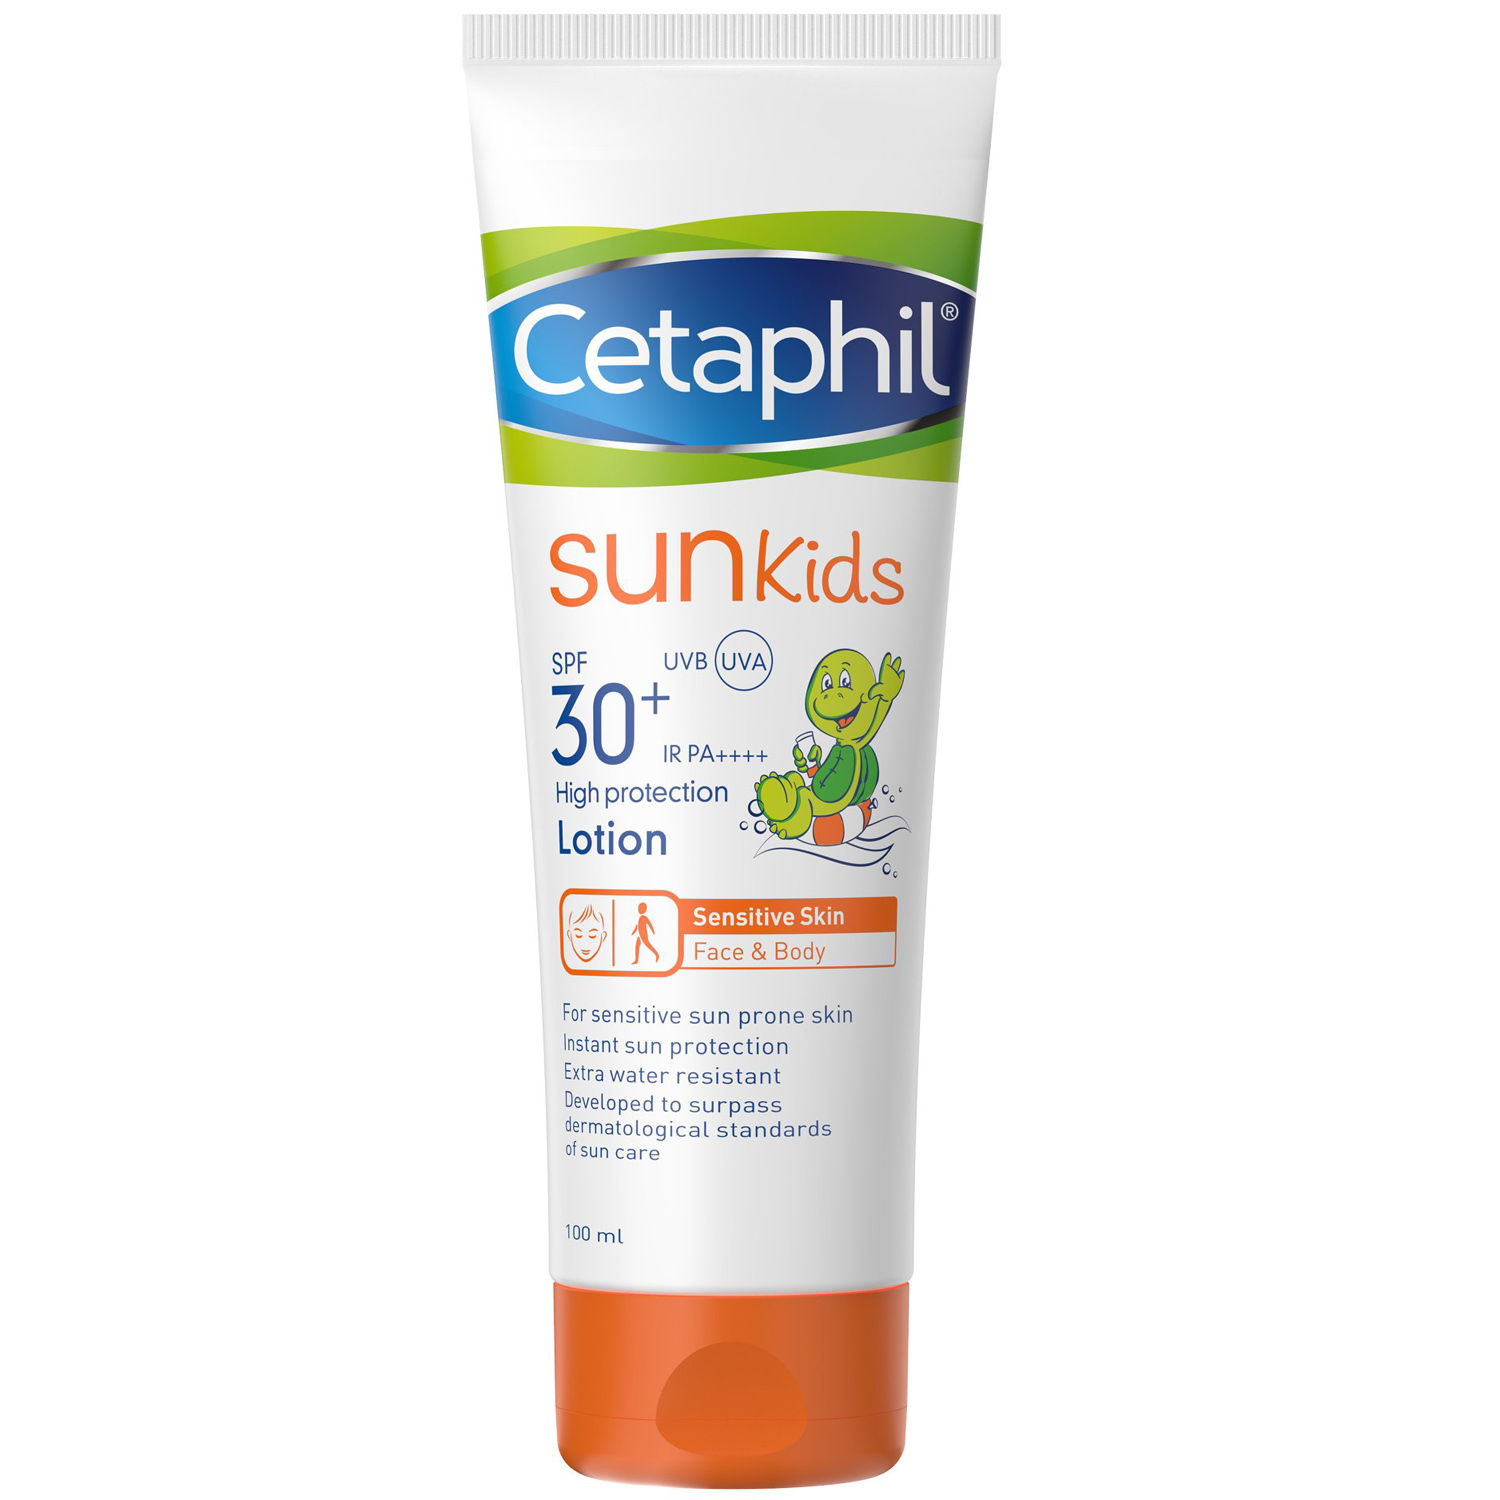 Cetaphil Sun Kids High Protection Lotion SPF 30+ IR PA+++ UVA & UVB, 100 ml, Pack of 1 